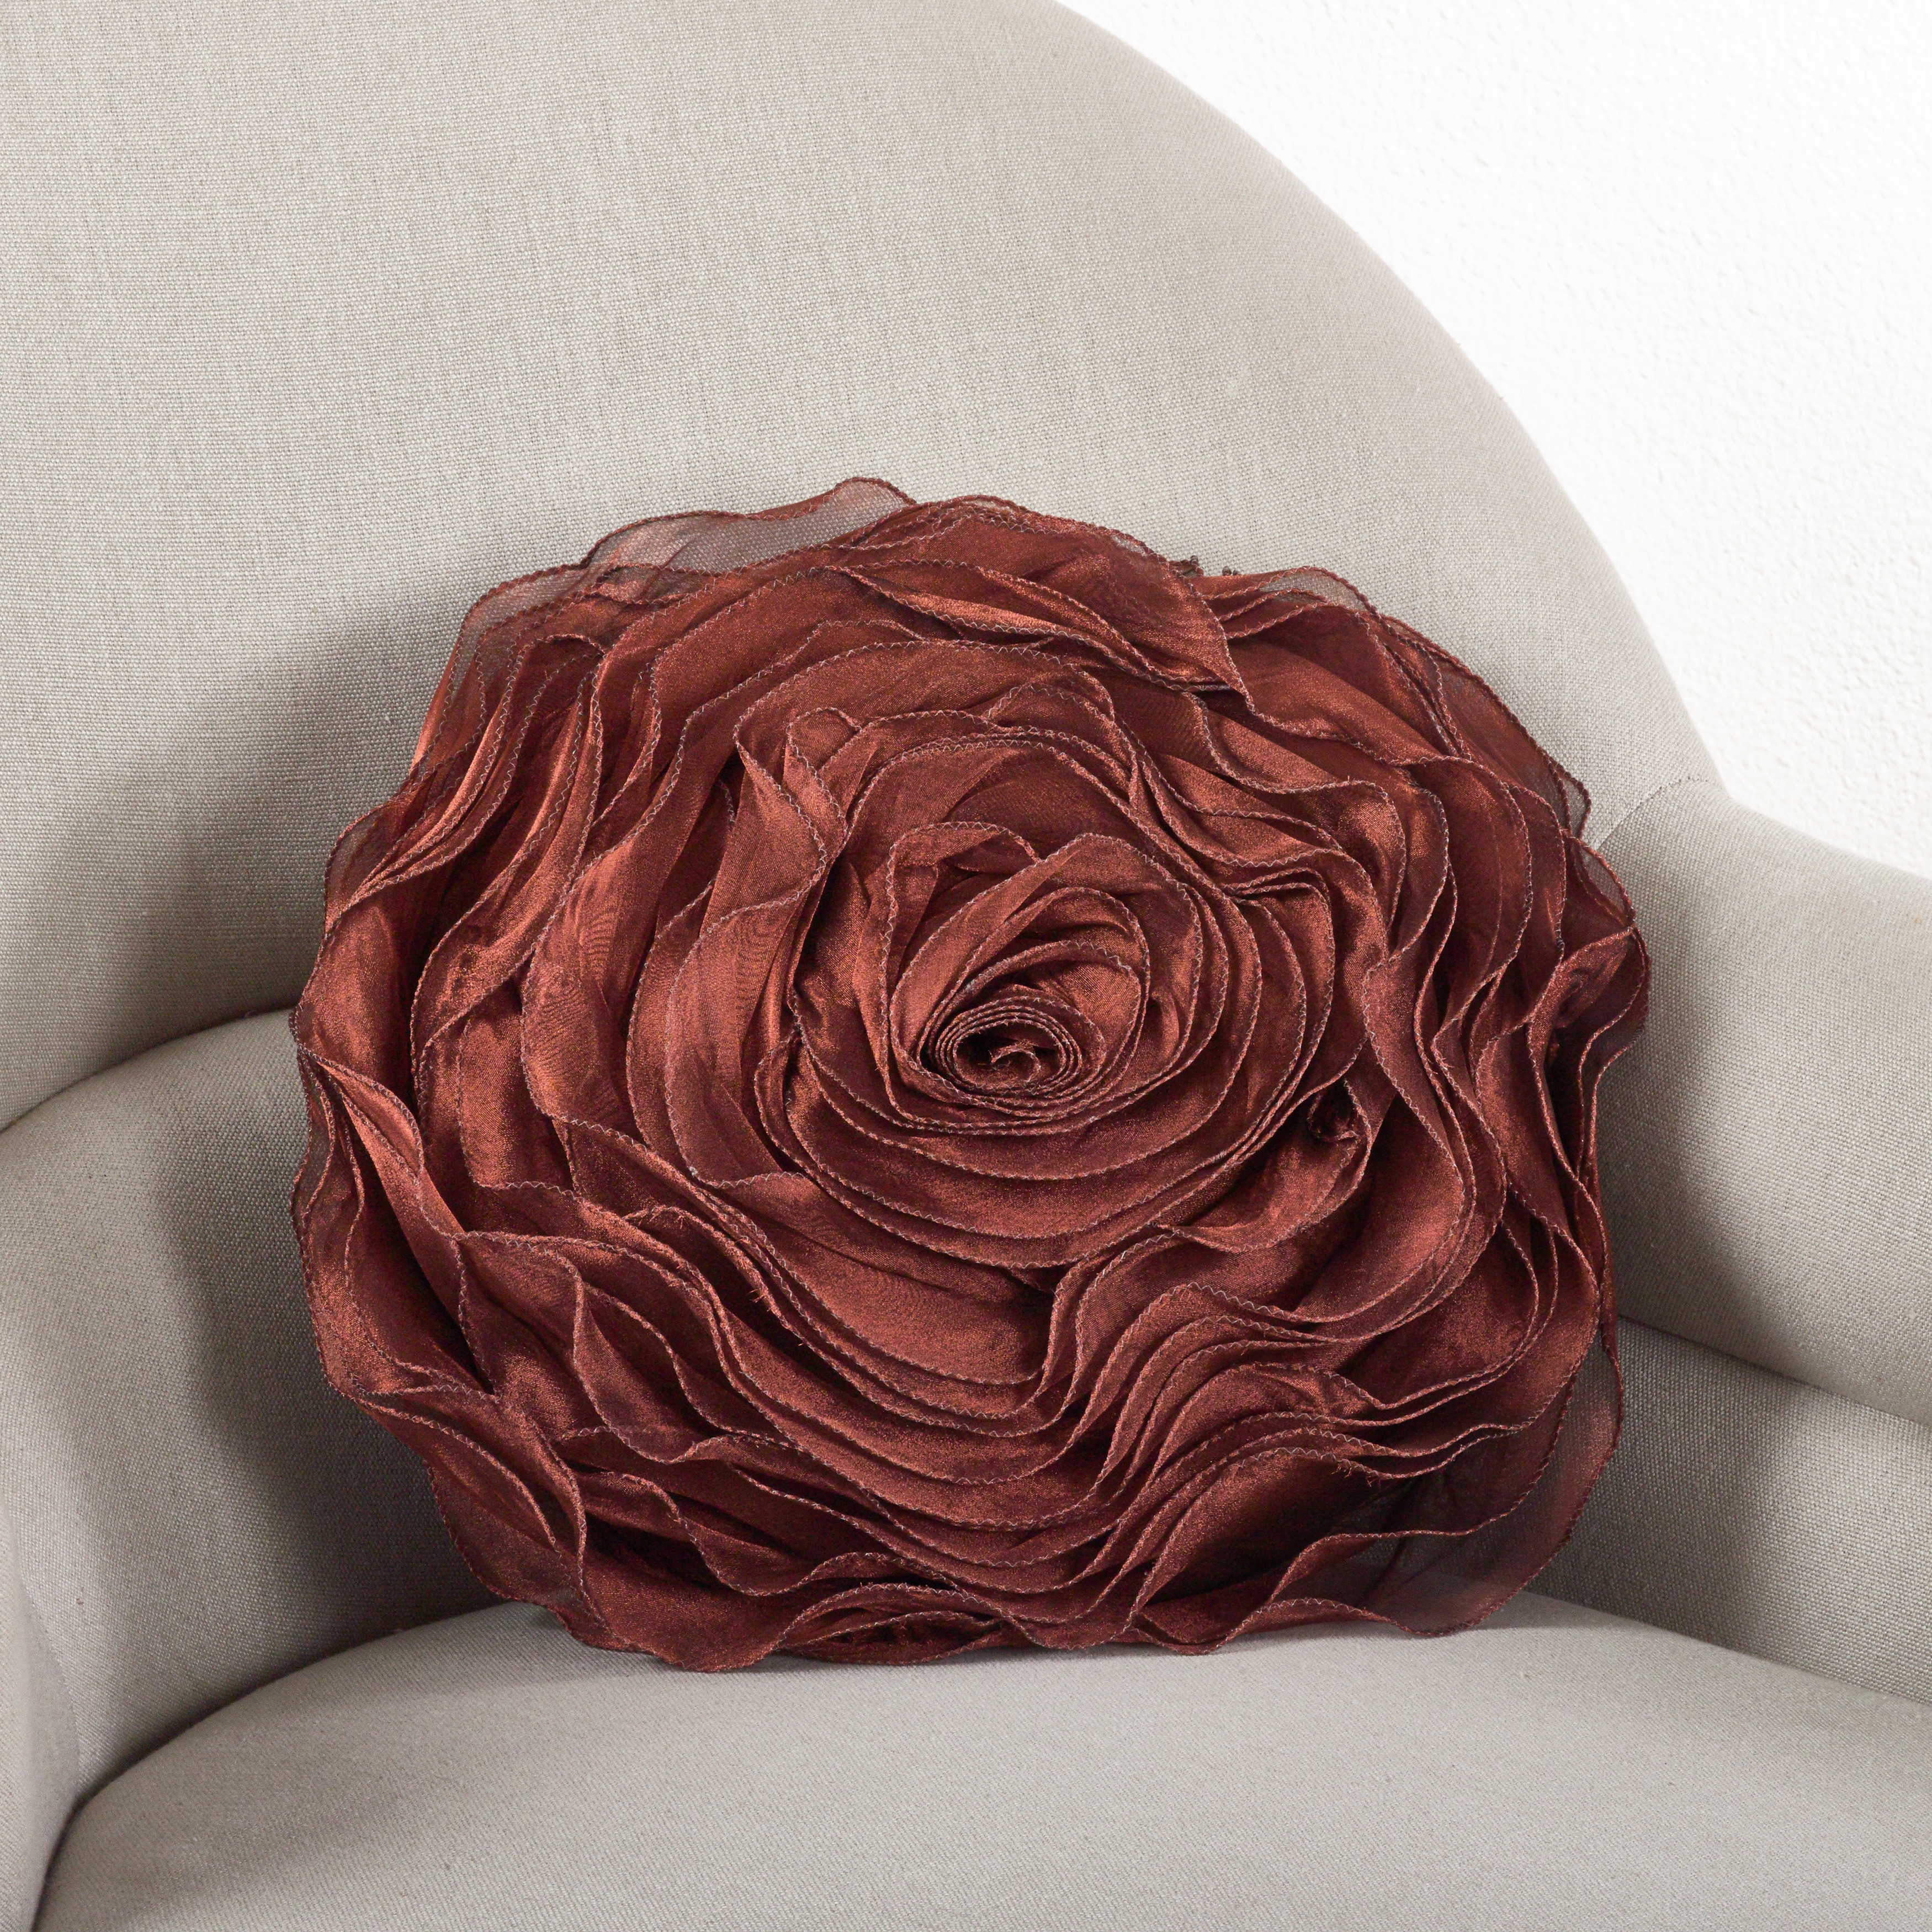 Rose Design Throw Pillow On Sale Bed Bath  Beyond 8649905